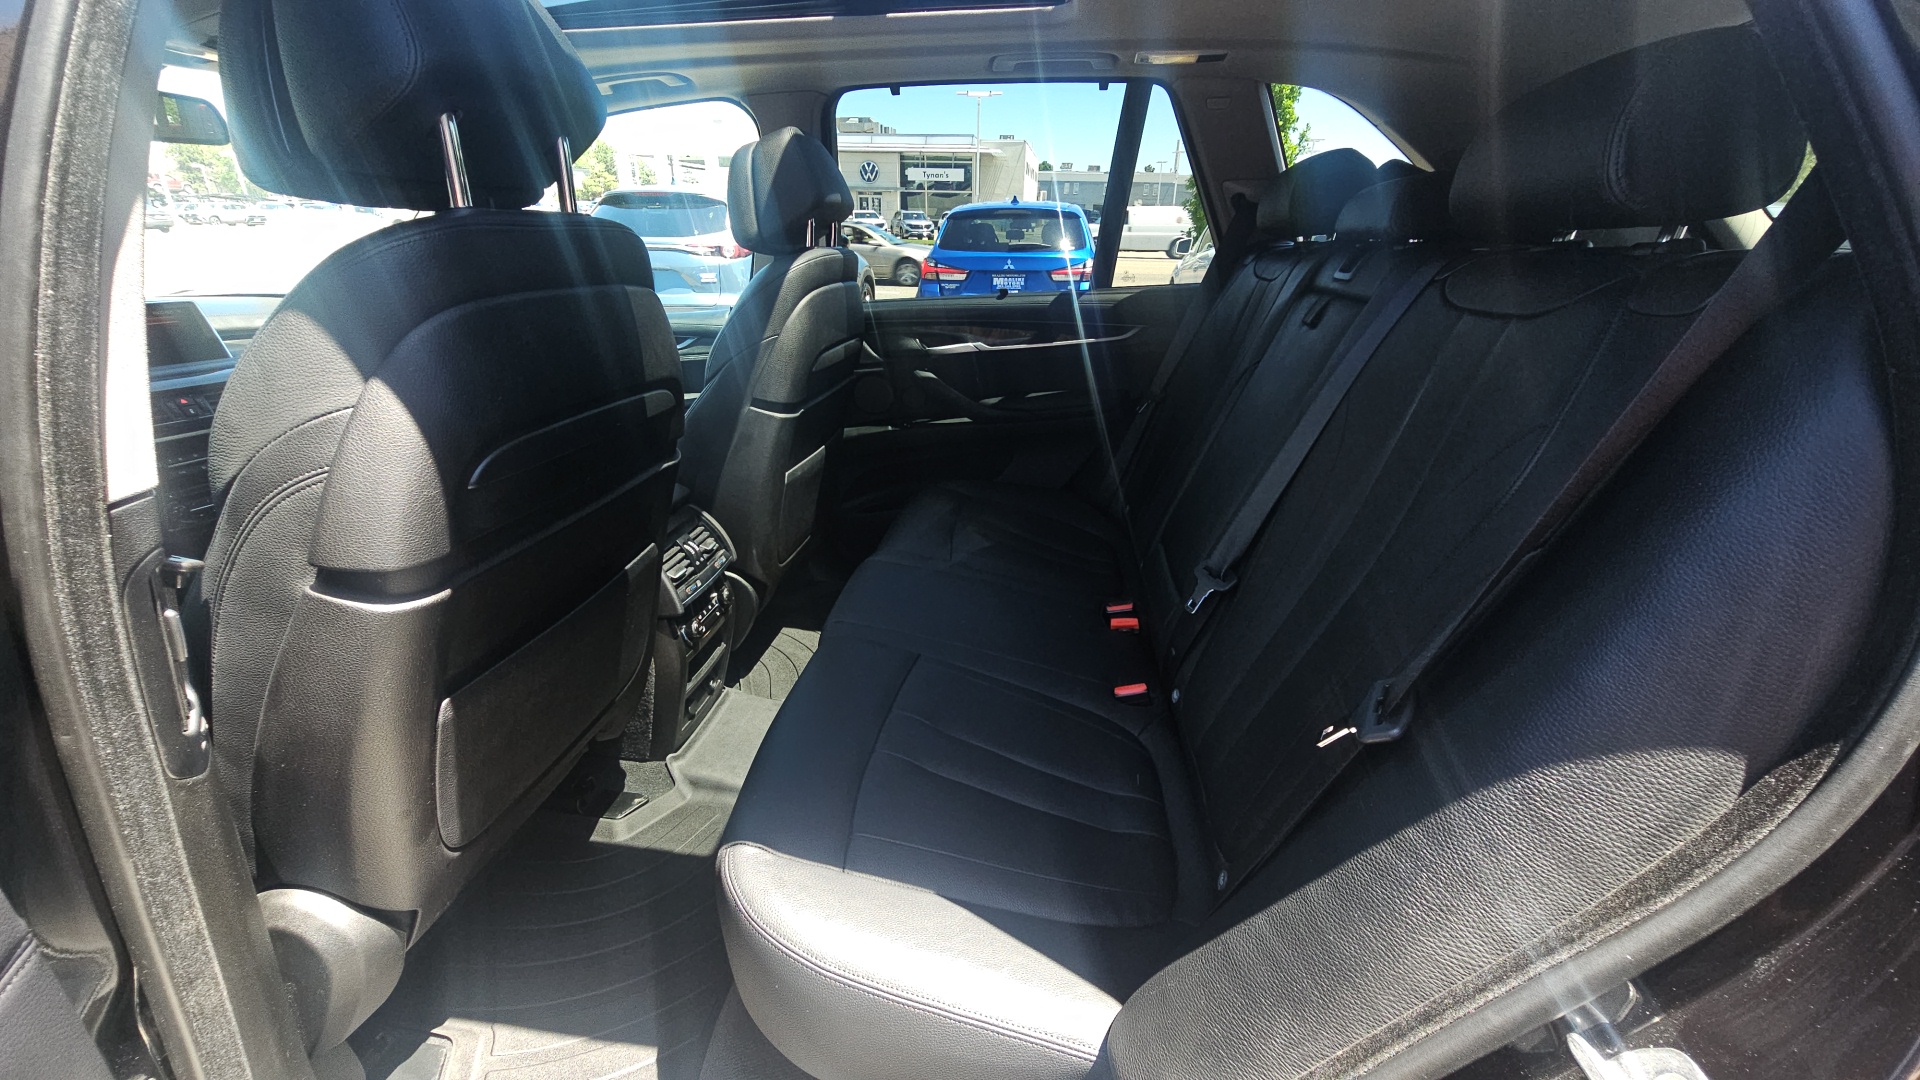 2016 BMW X5 xDrive50i AWD, Twin Turbo V8, Navigation, Sunroof, 8